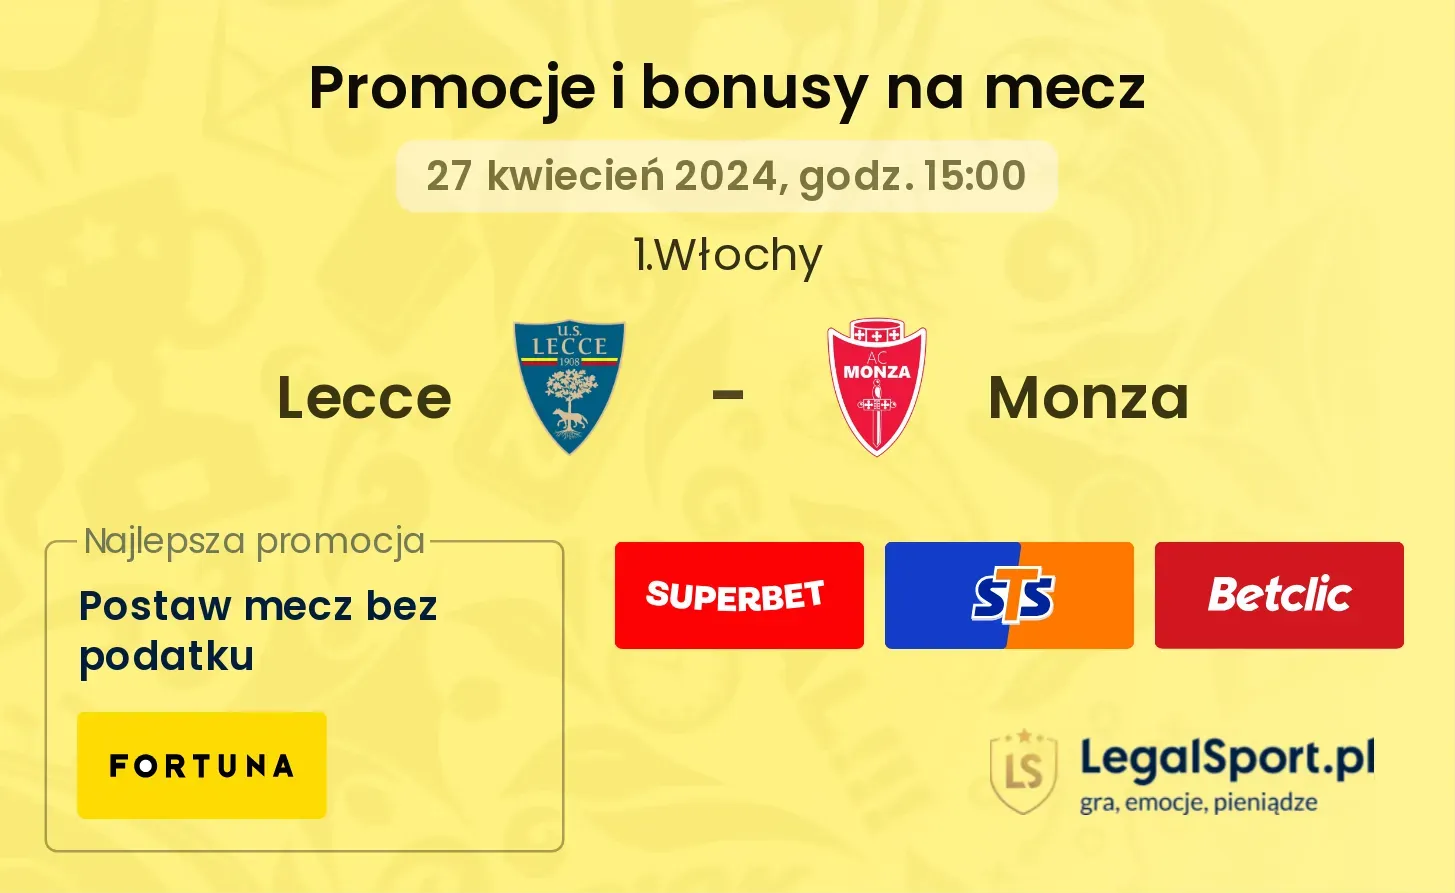 Lecce - Monza promocje bonusy na mecz